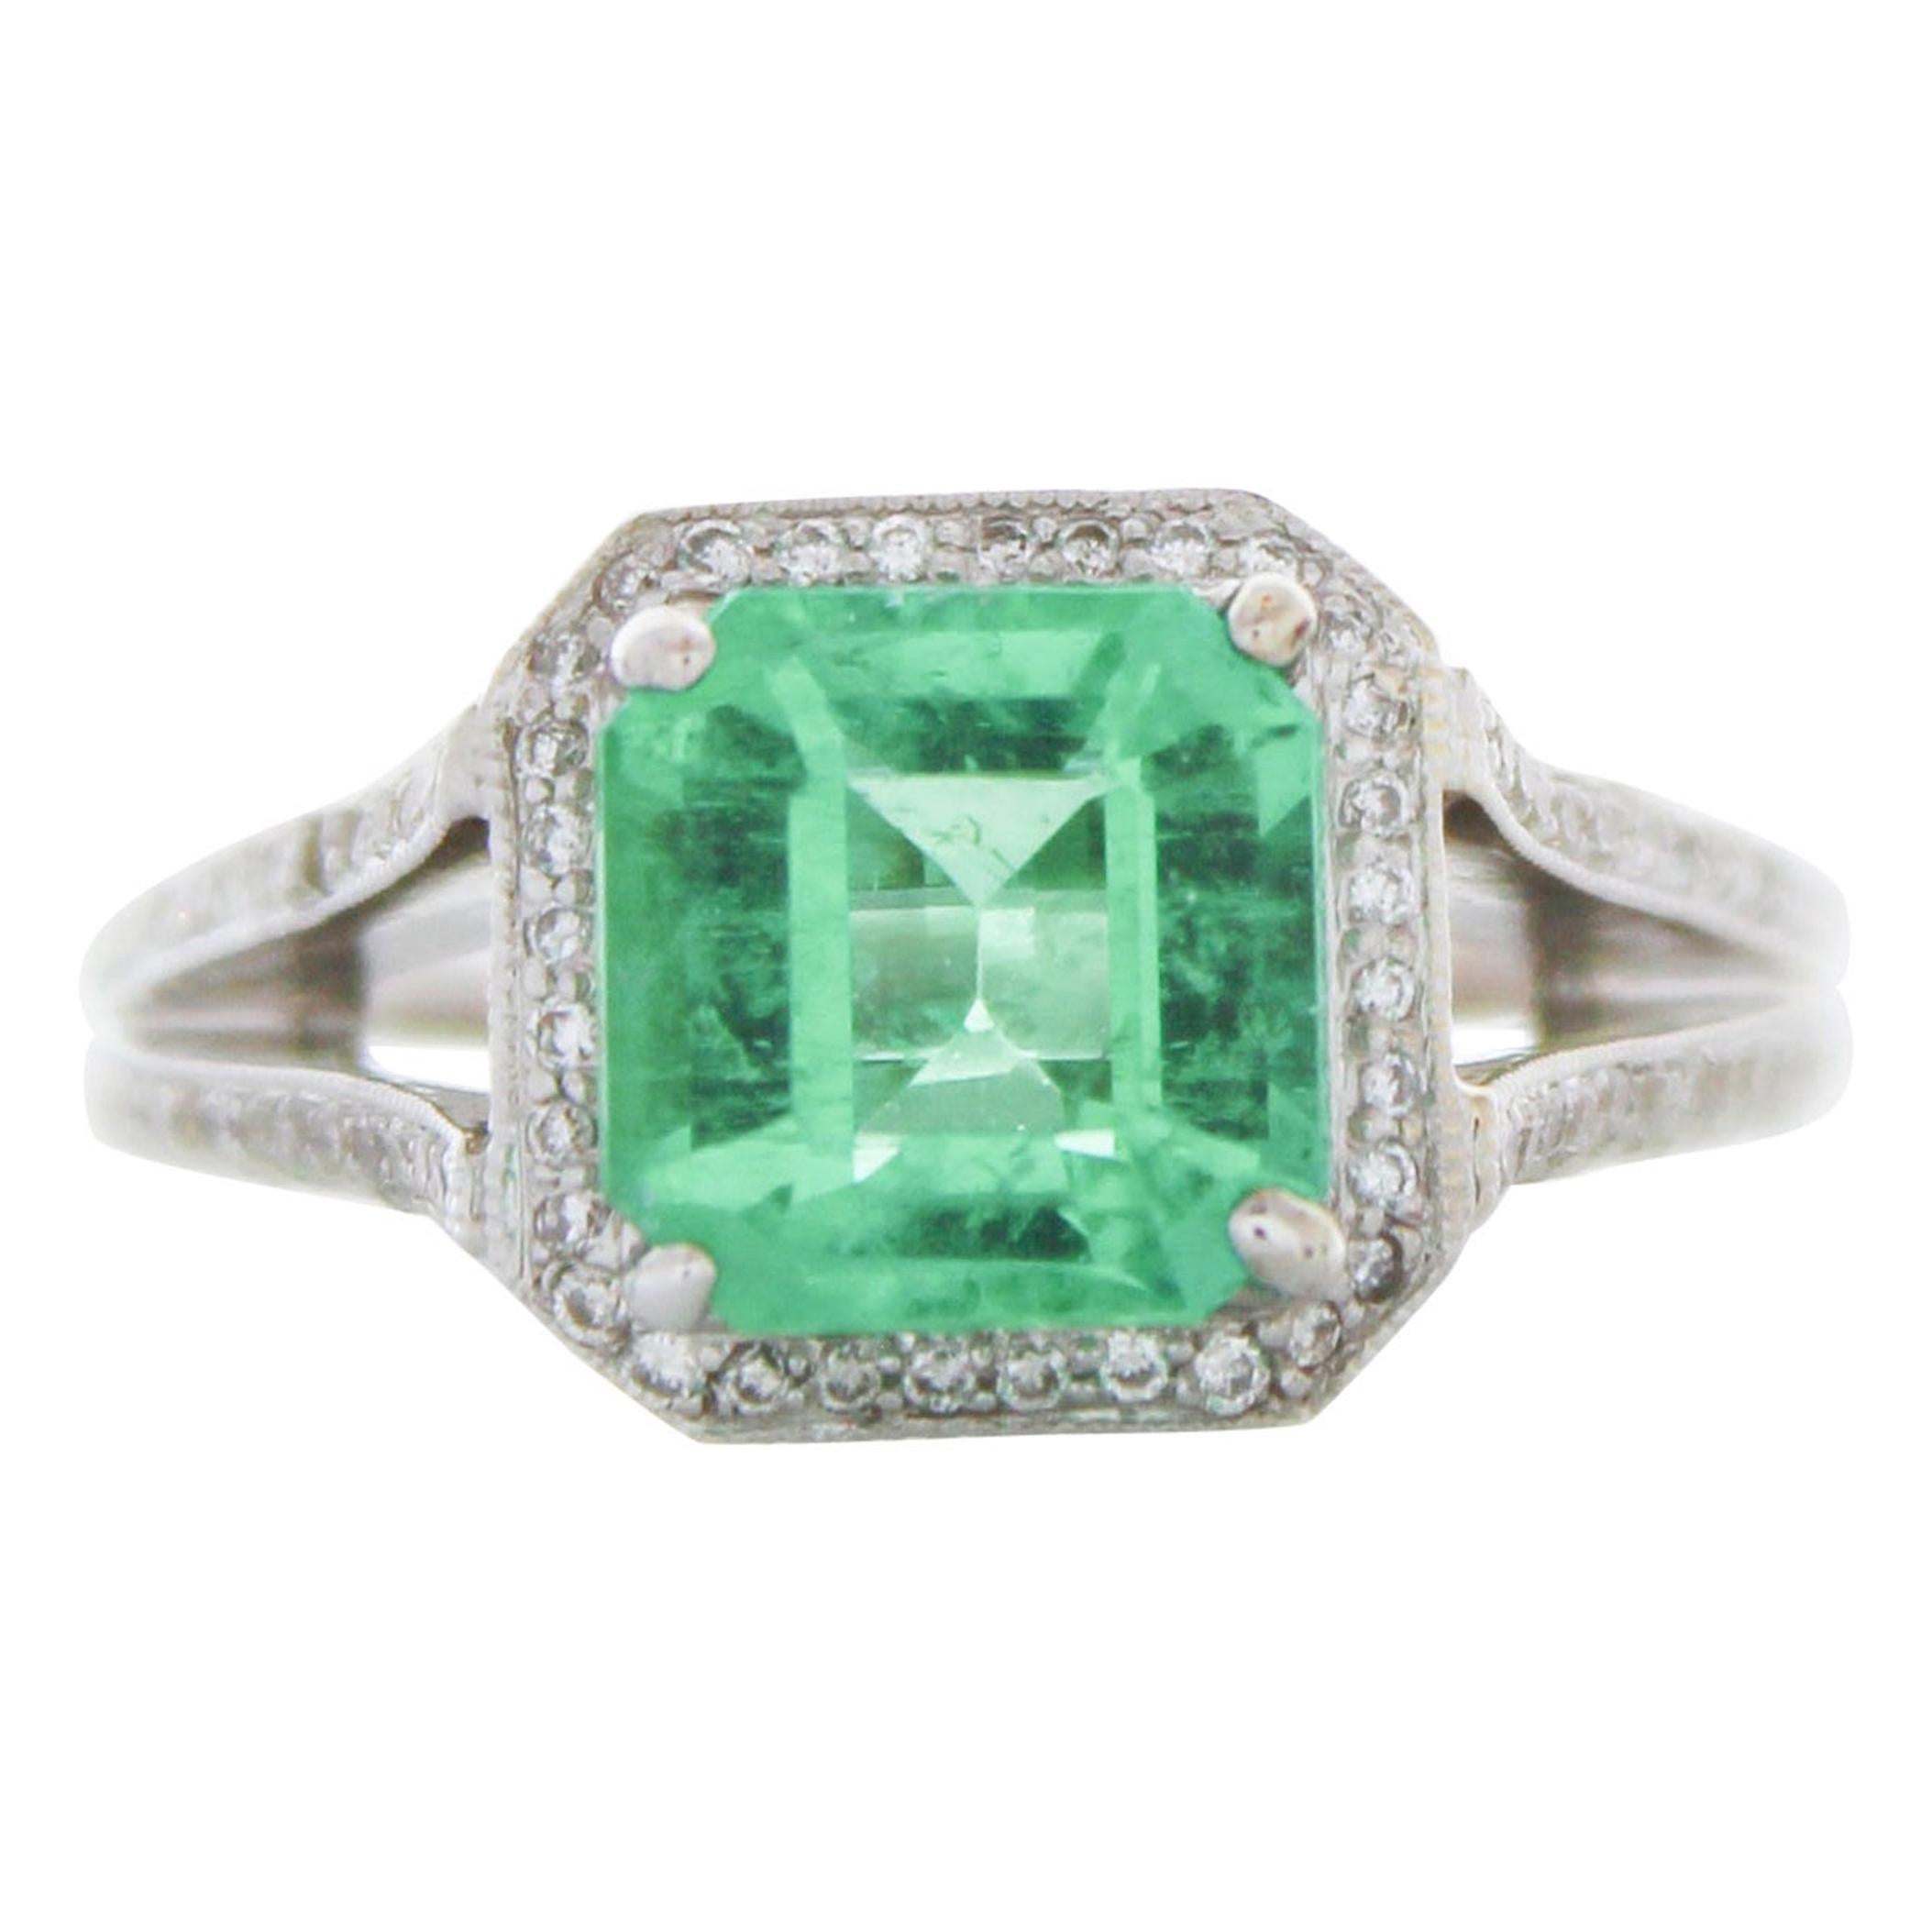 2.21 Carat Square Emerald Cut Emerald & Diamond Ring in 18k White Gold